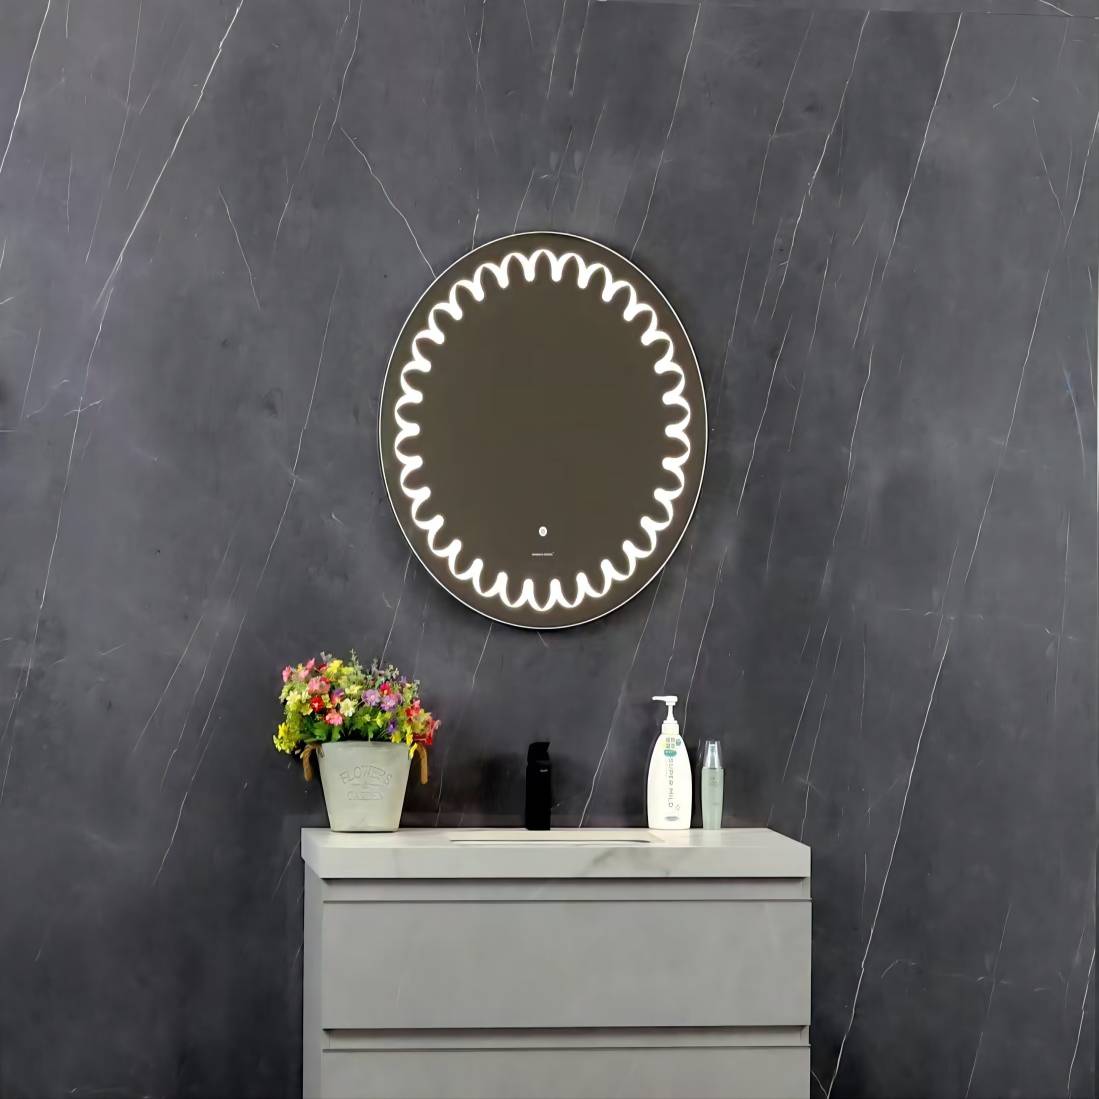 DIY: IKEA inspired sunburst mirror in a budget | The Business Standard